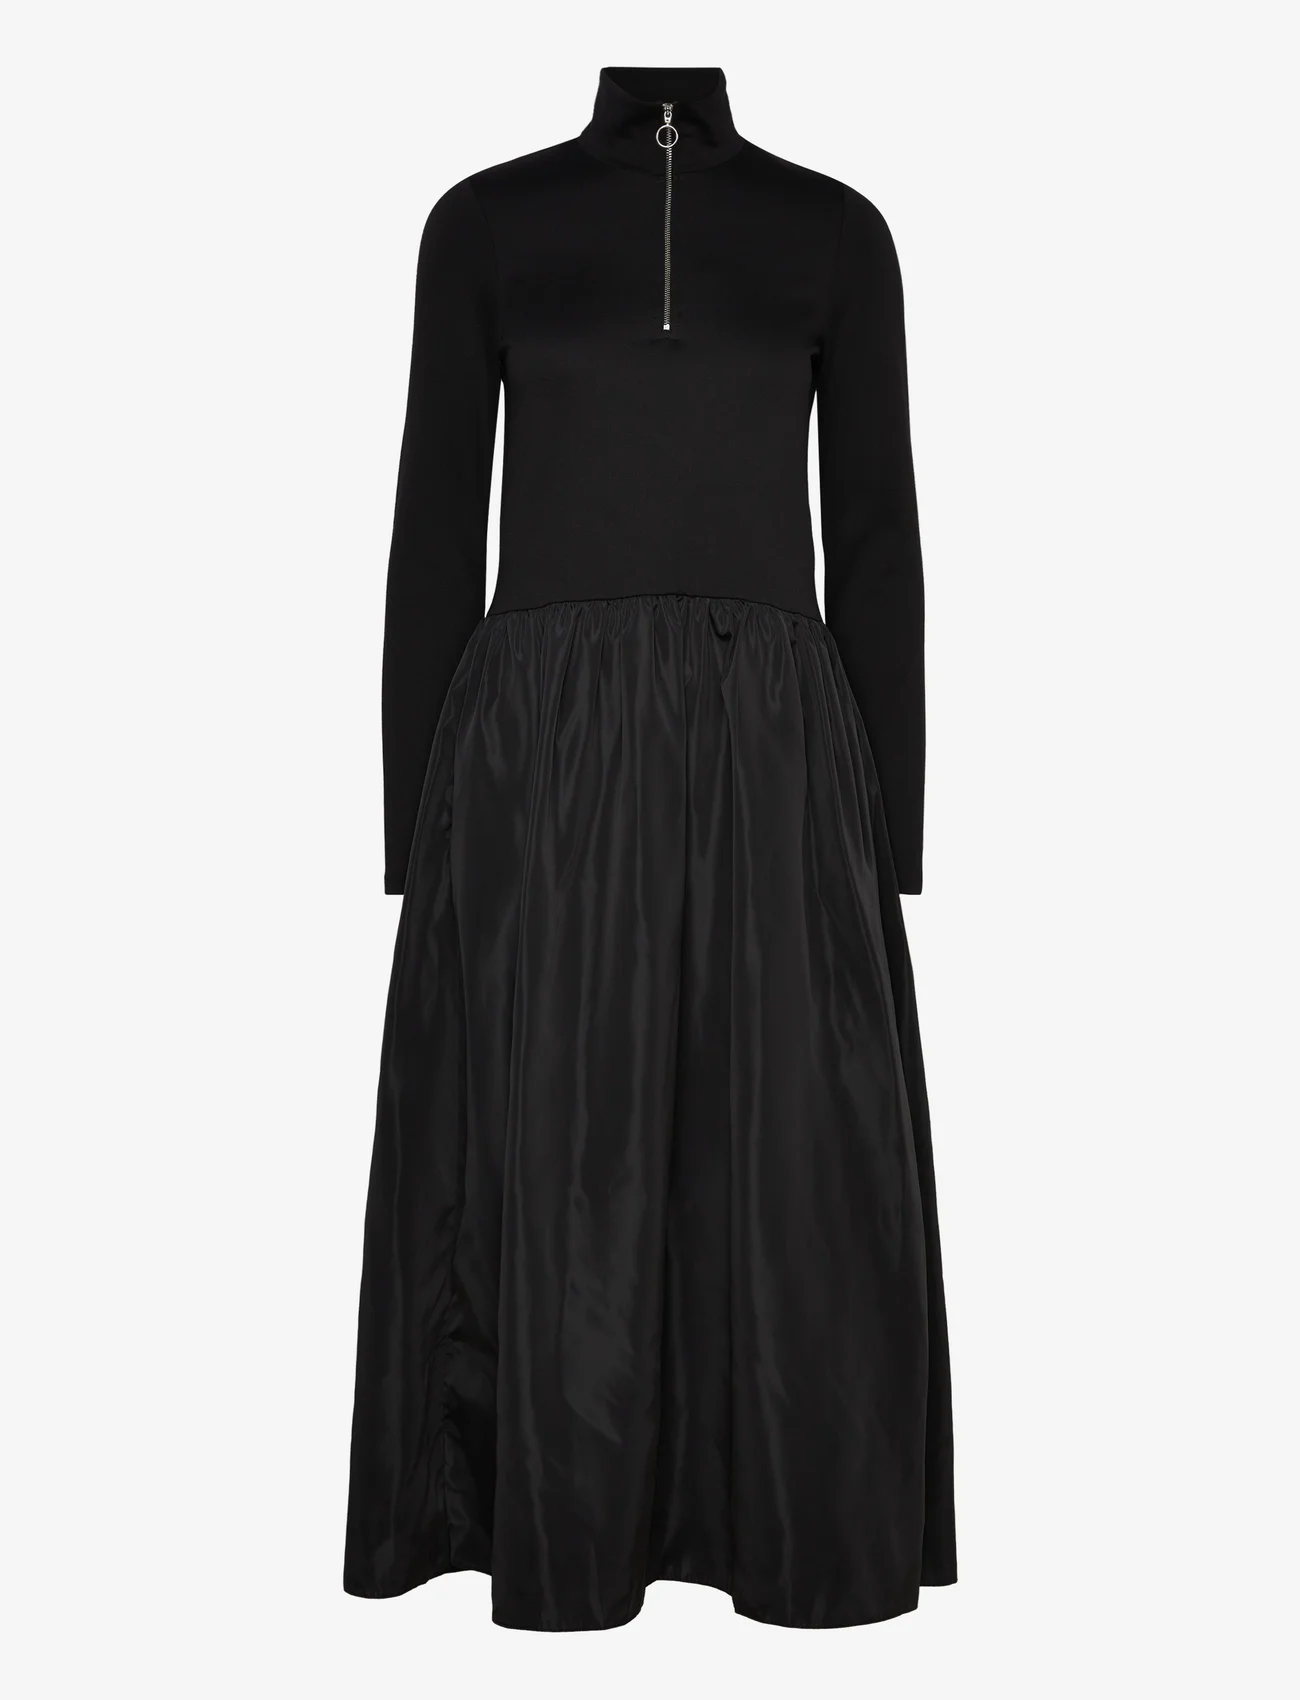 InWear - AlineIW Dress - maxi kjoler - black - 0